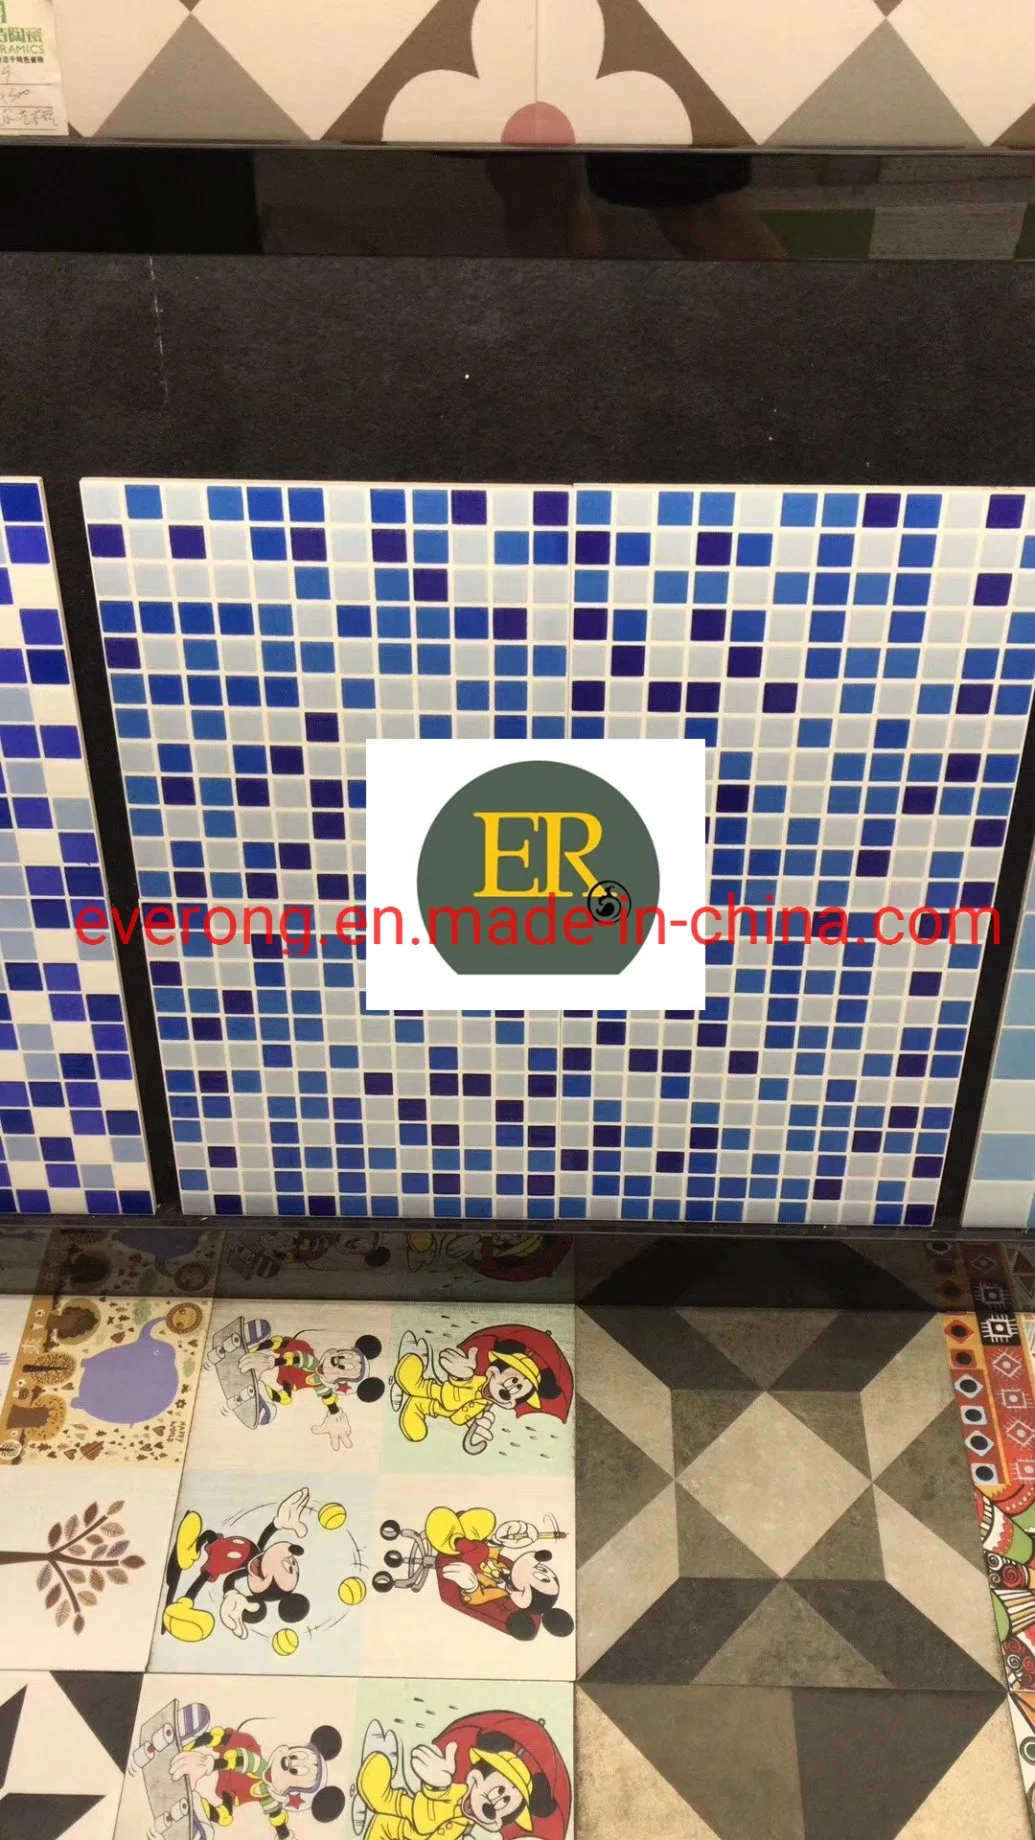 Blue Glass/Stone/Marble/Metal/Lantern/Ceramic Mosaic Tile for Bathroom/Swimming Pool Floor Mosaic Tiles